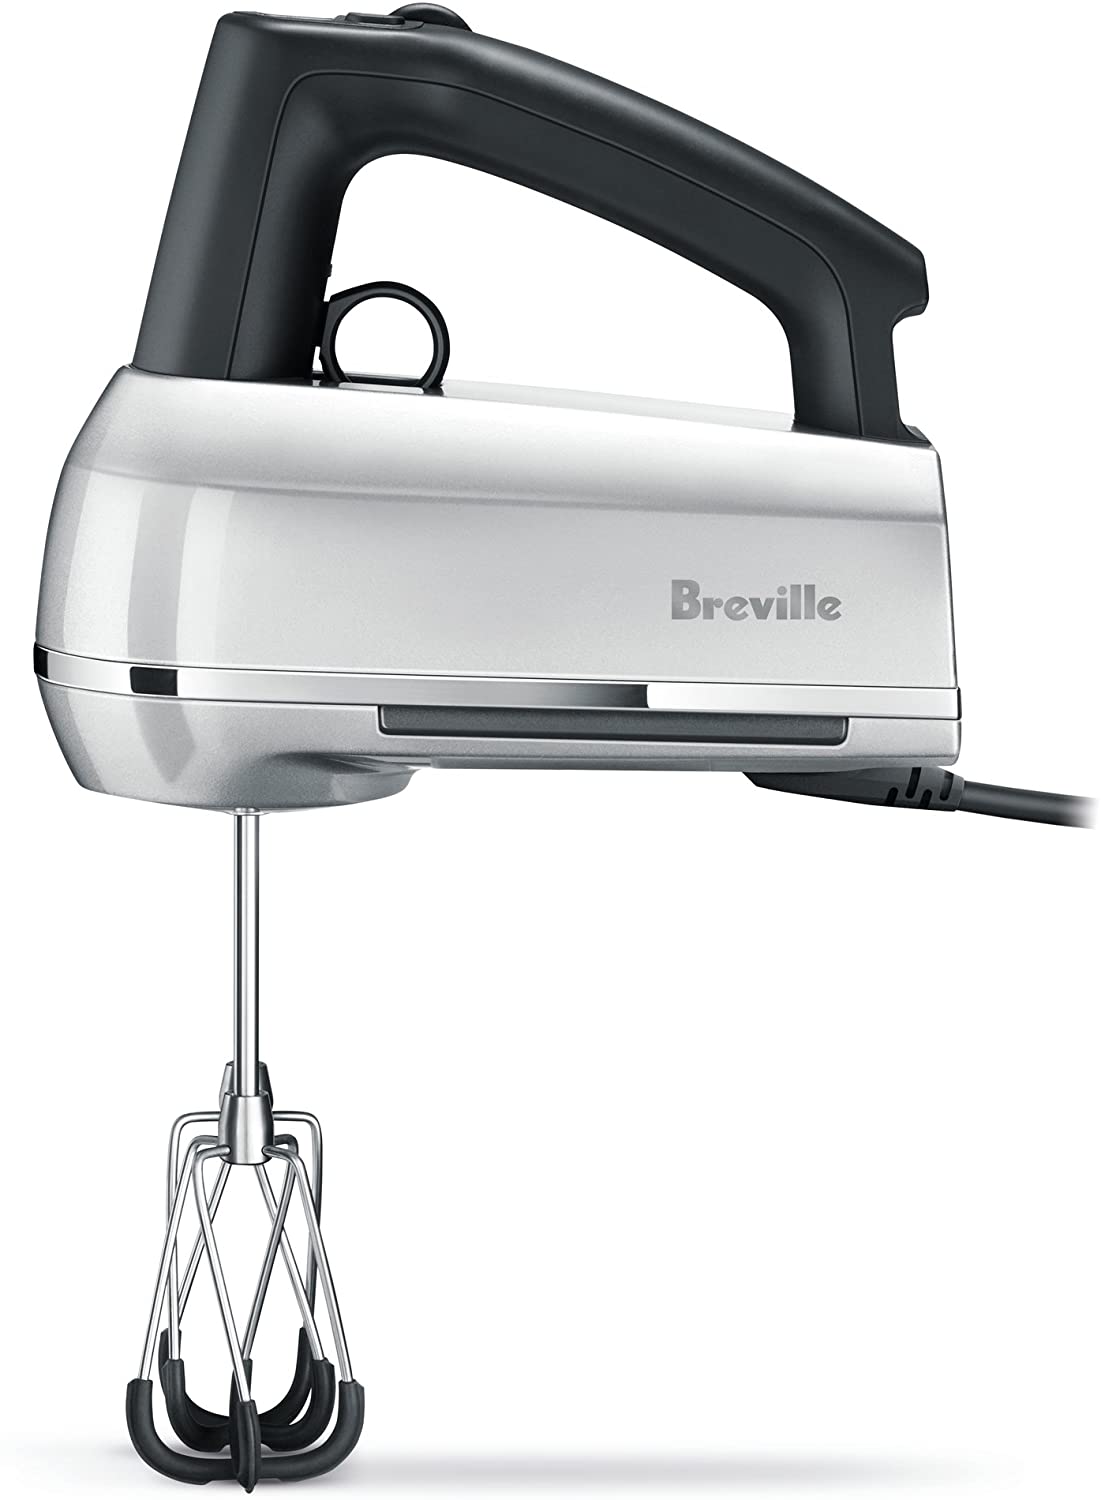 Breville BHM800SIL Beater IQ Technology Quiet Hand Mixer, 9-Speed